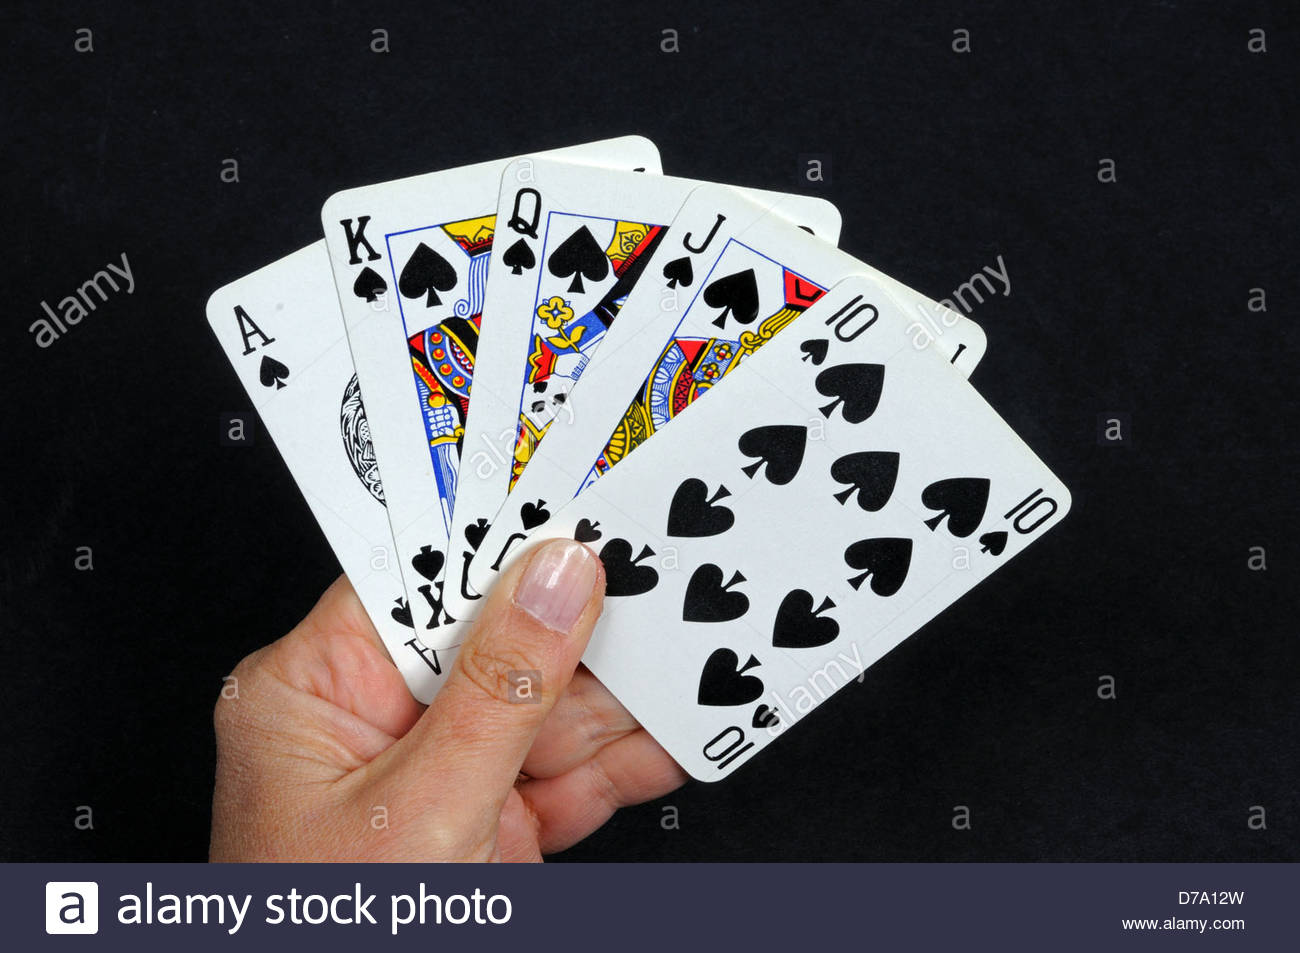 3 card poker royal flush